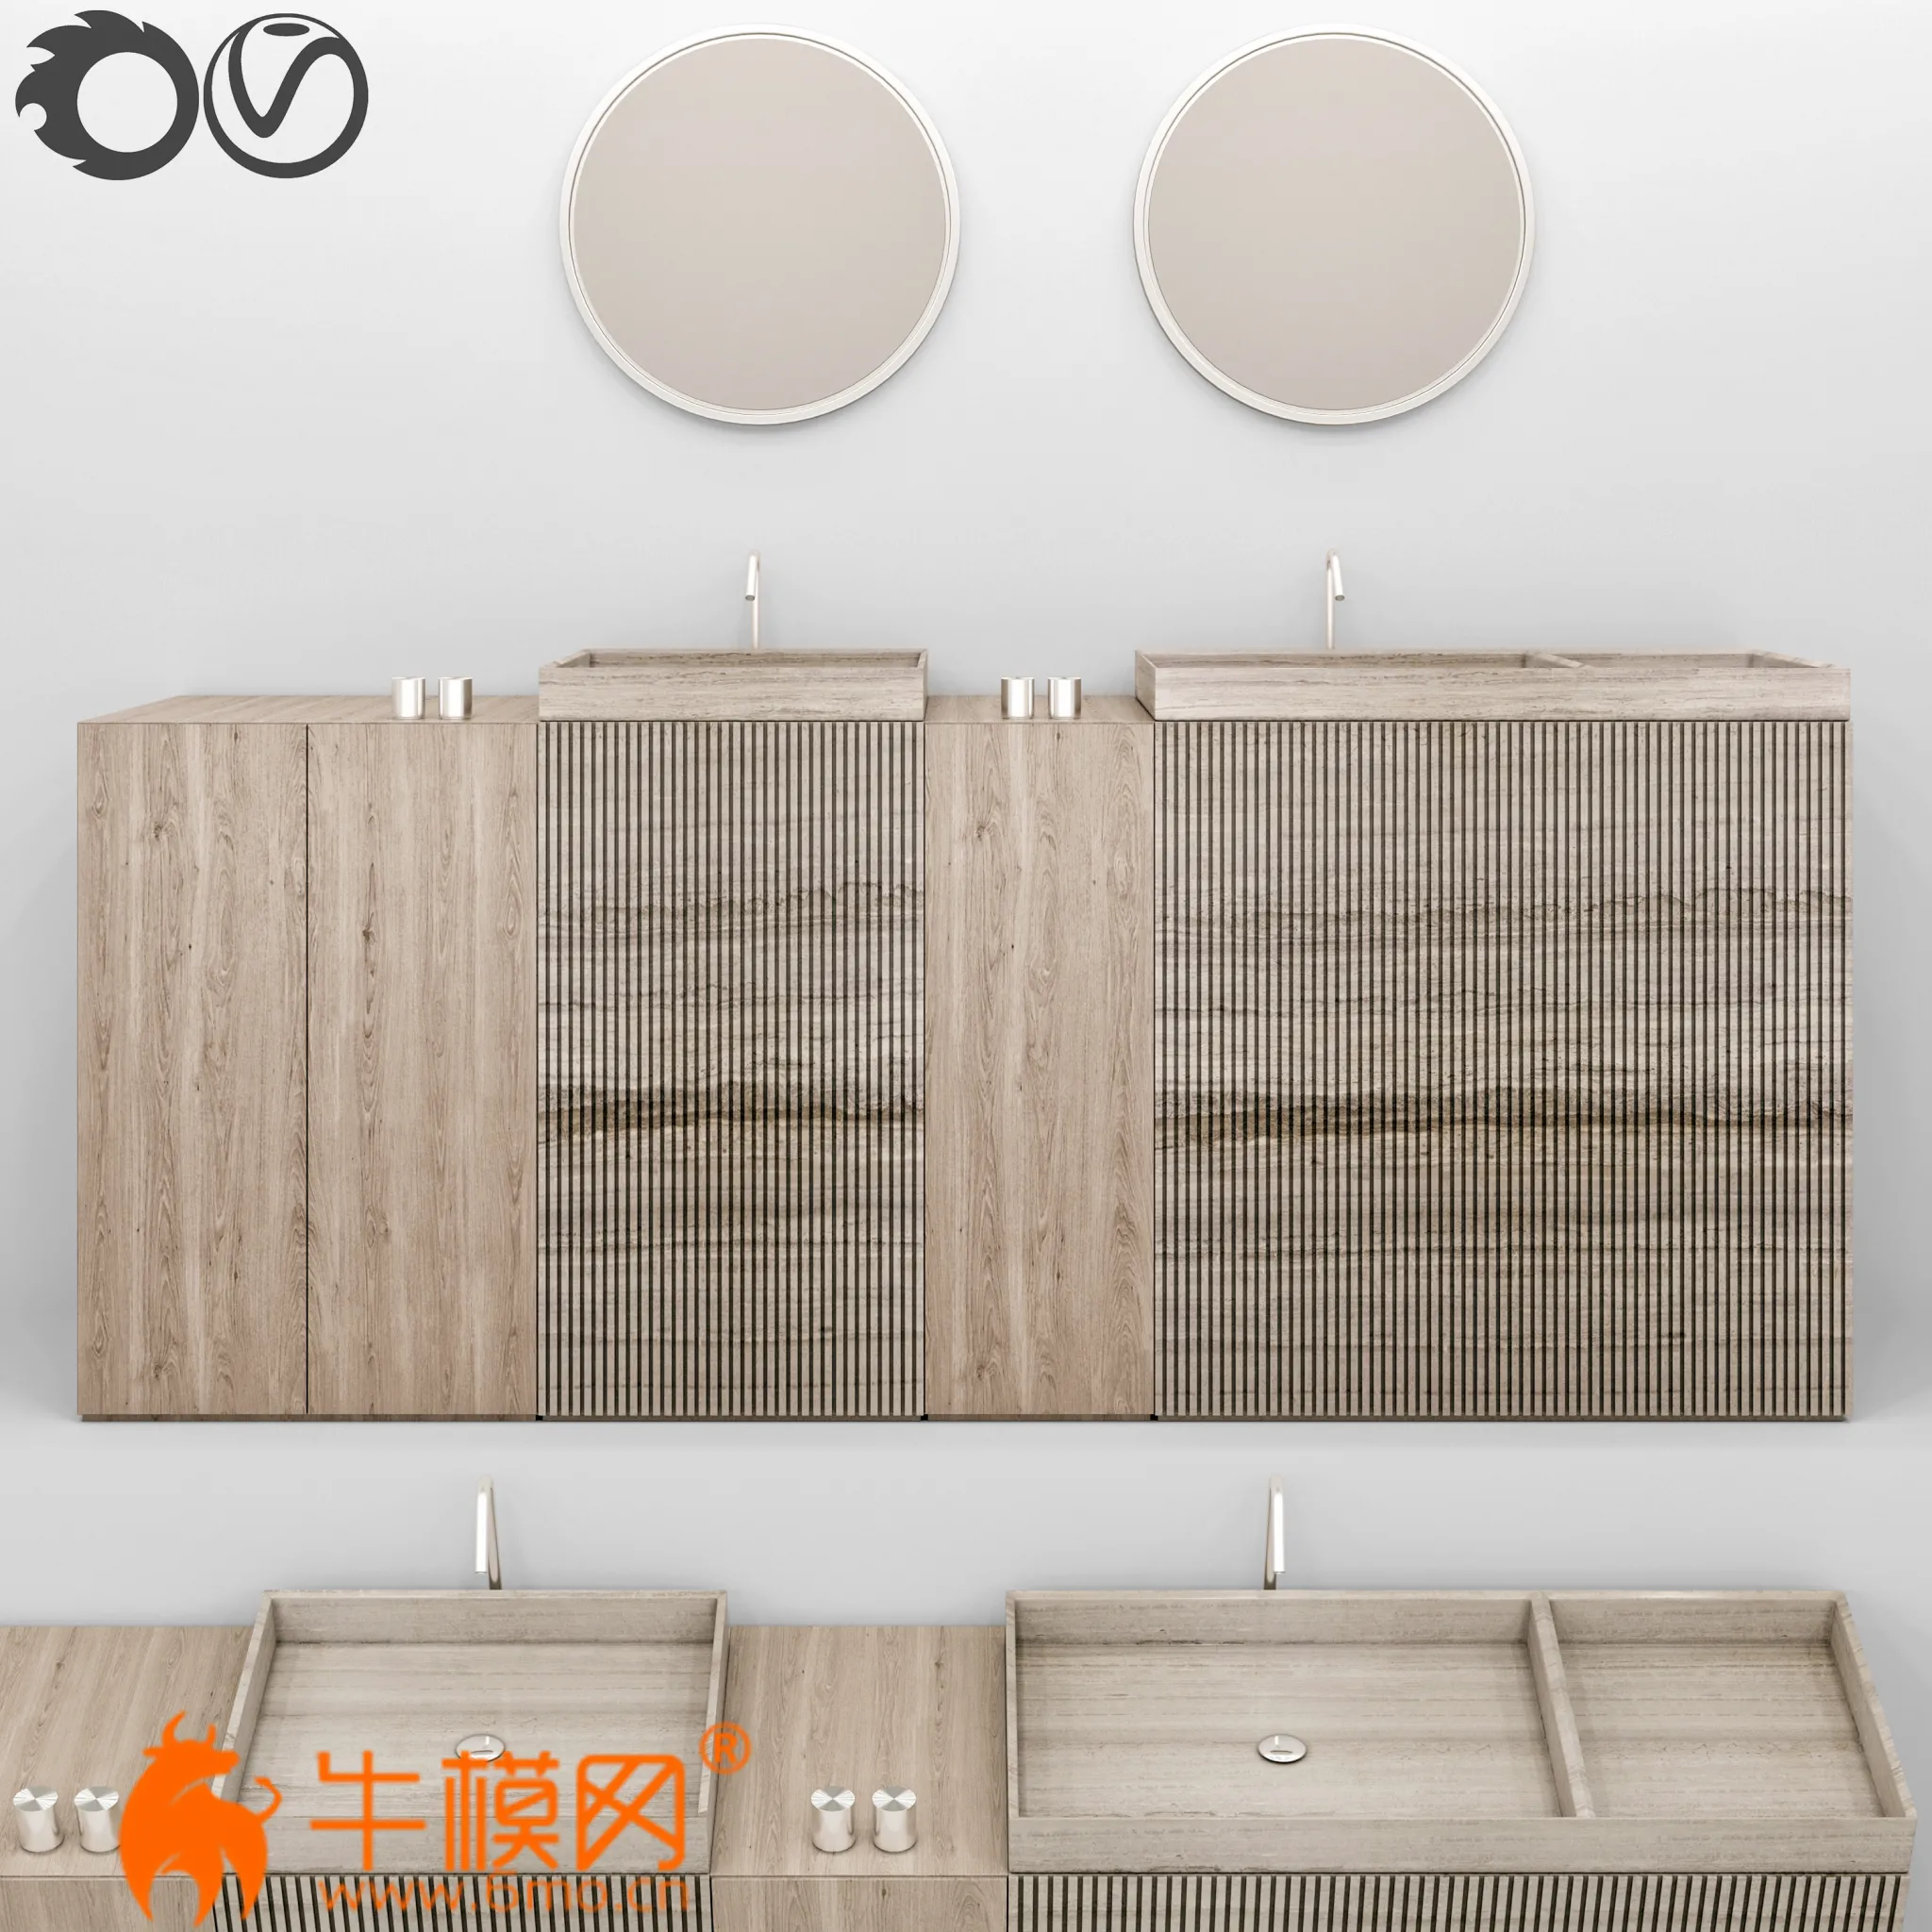 Bathroom furniture 4 (Vray, Corona, obj) – 3544